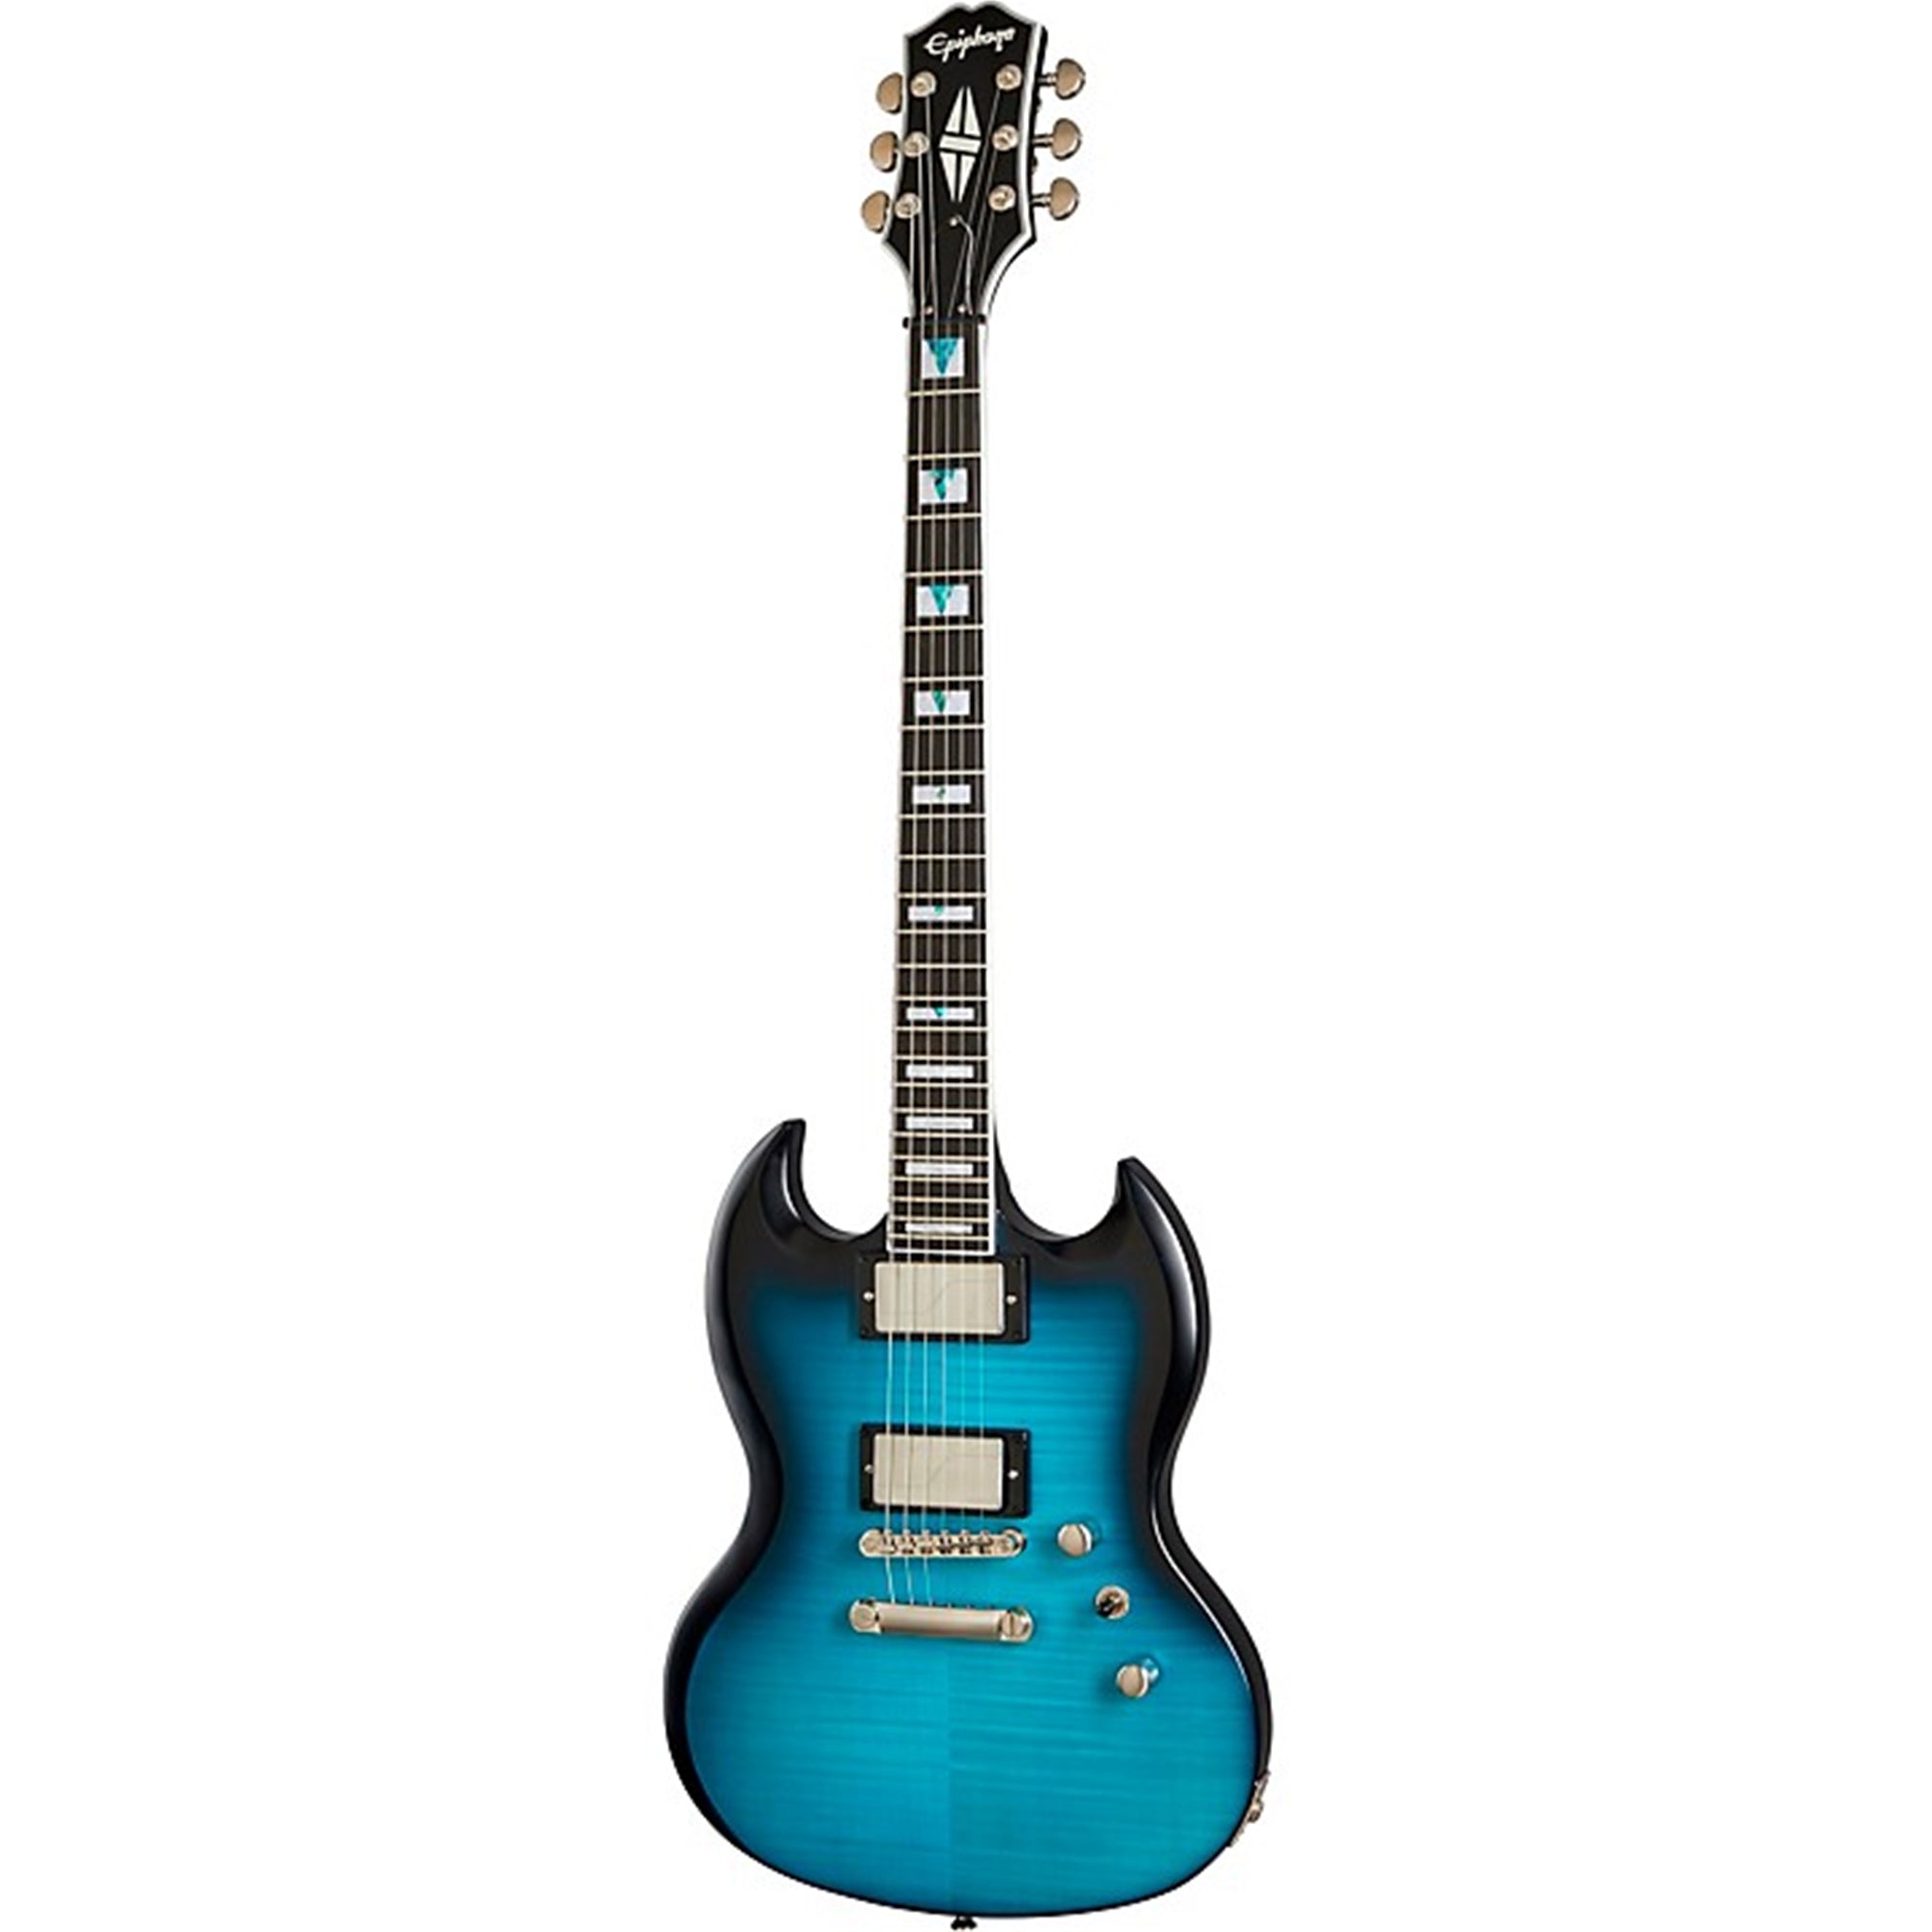 Epiphone EISYBTABNH1 Modern SG Prophecy Electric Guitar (Blue Tiger Aged Gloss)